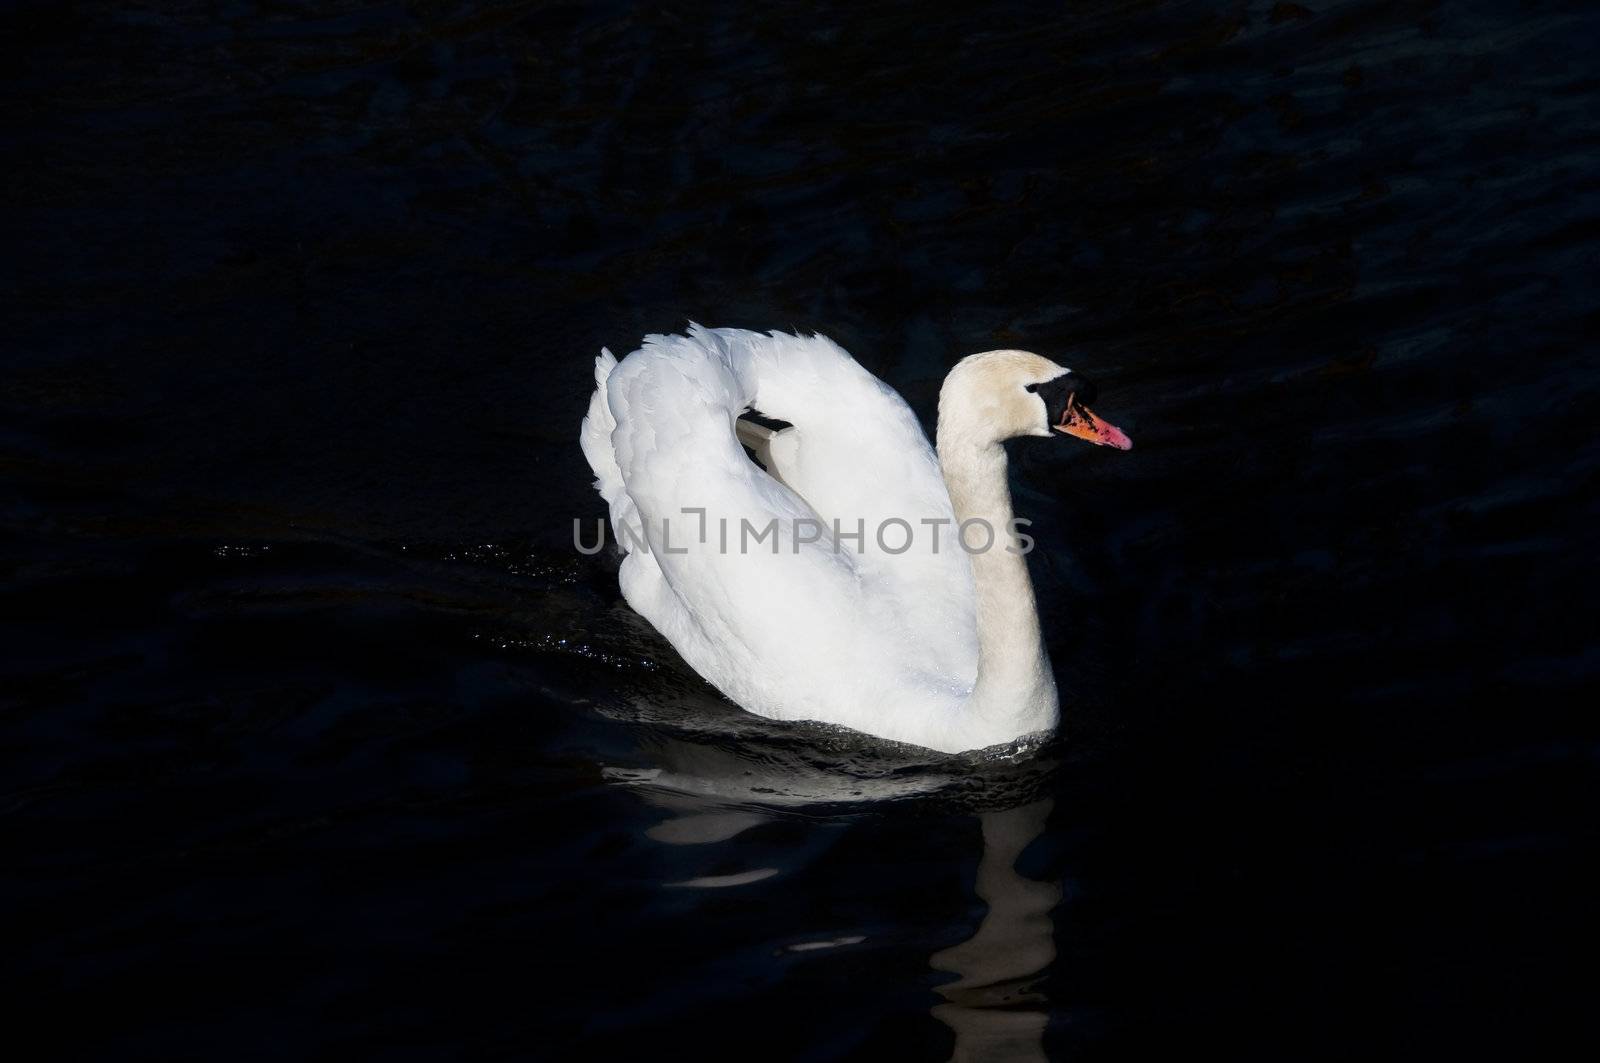 A white swan swimming on dark water